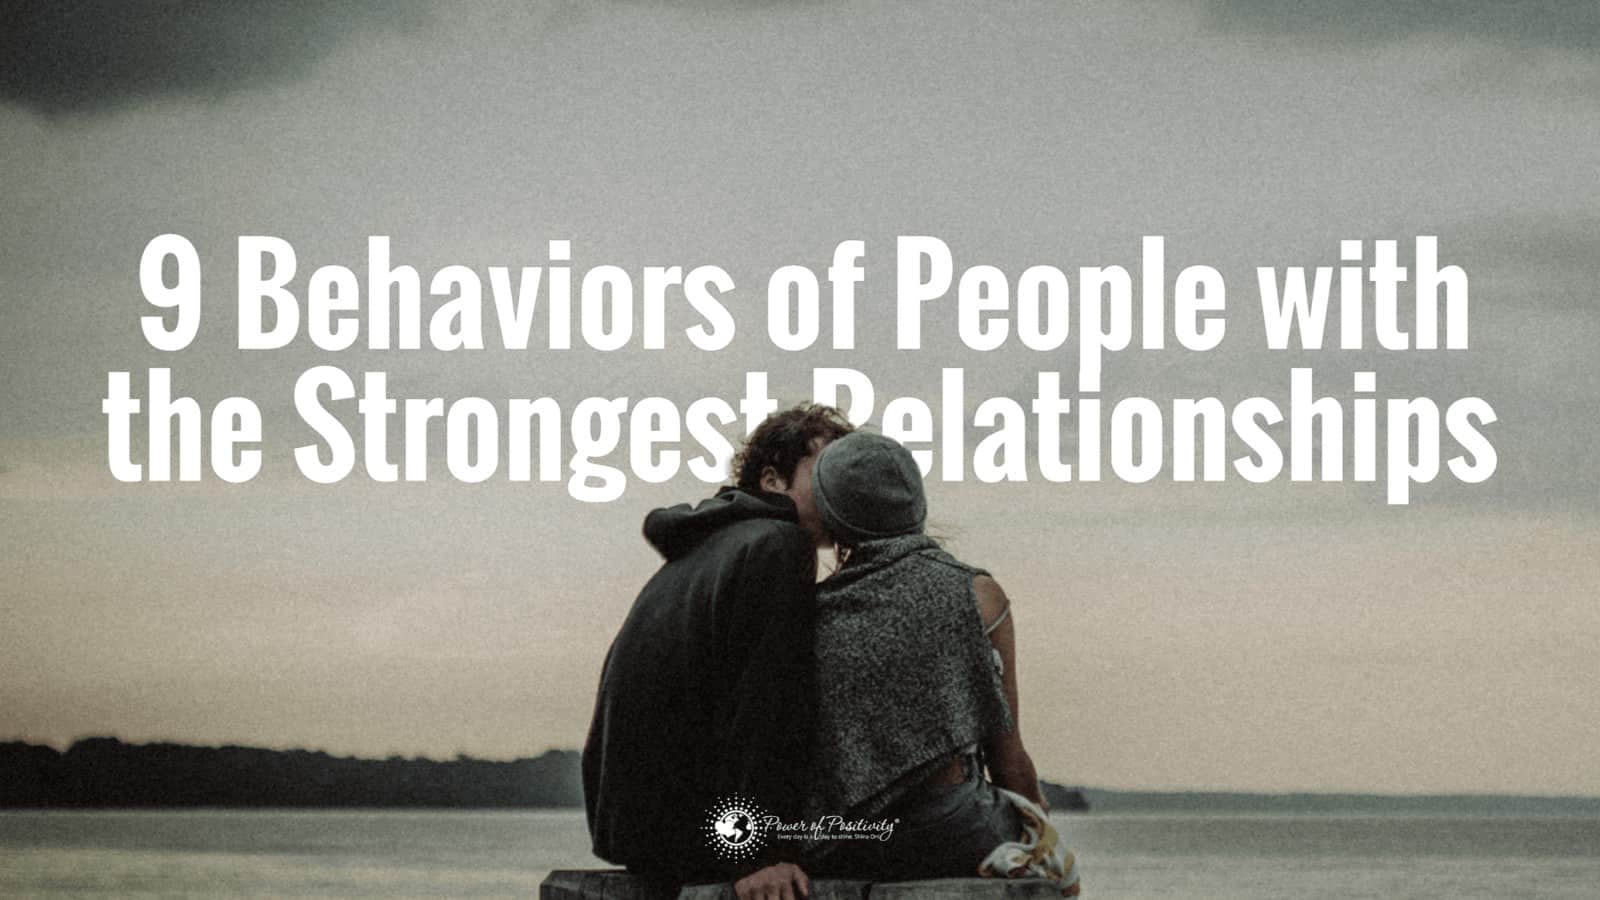 strongest relationships